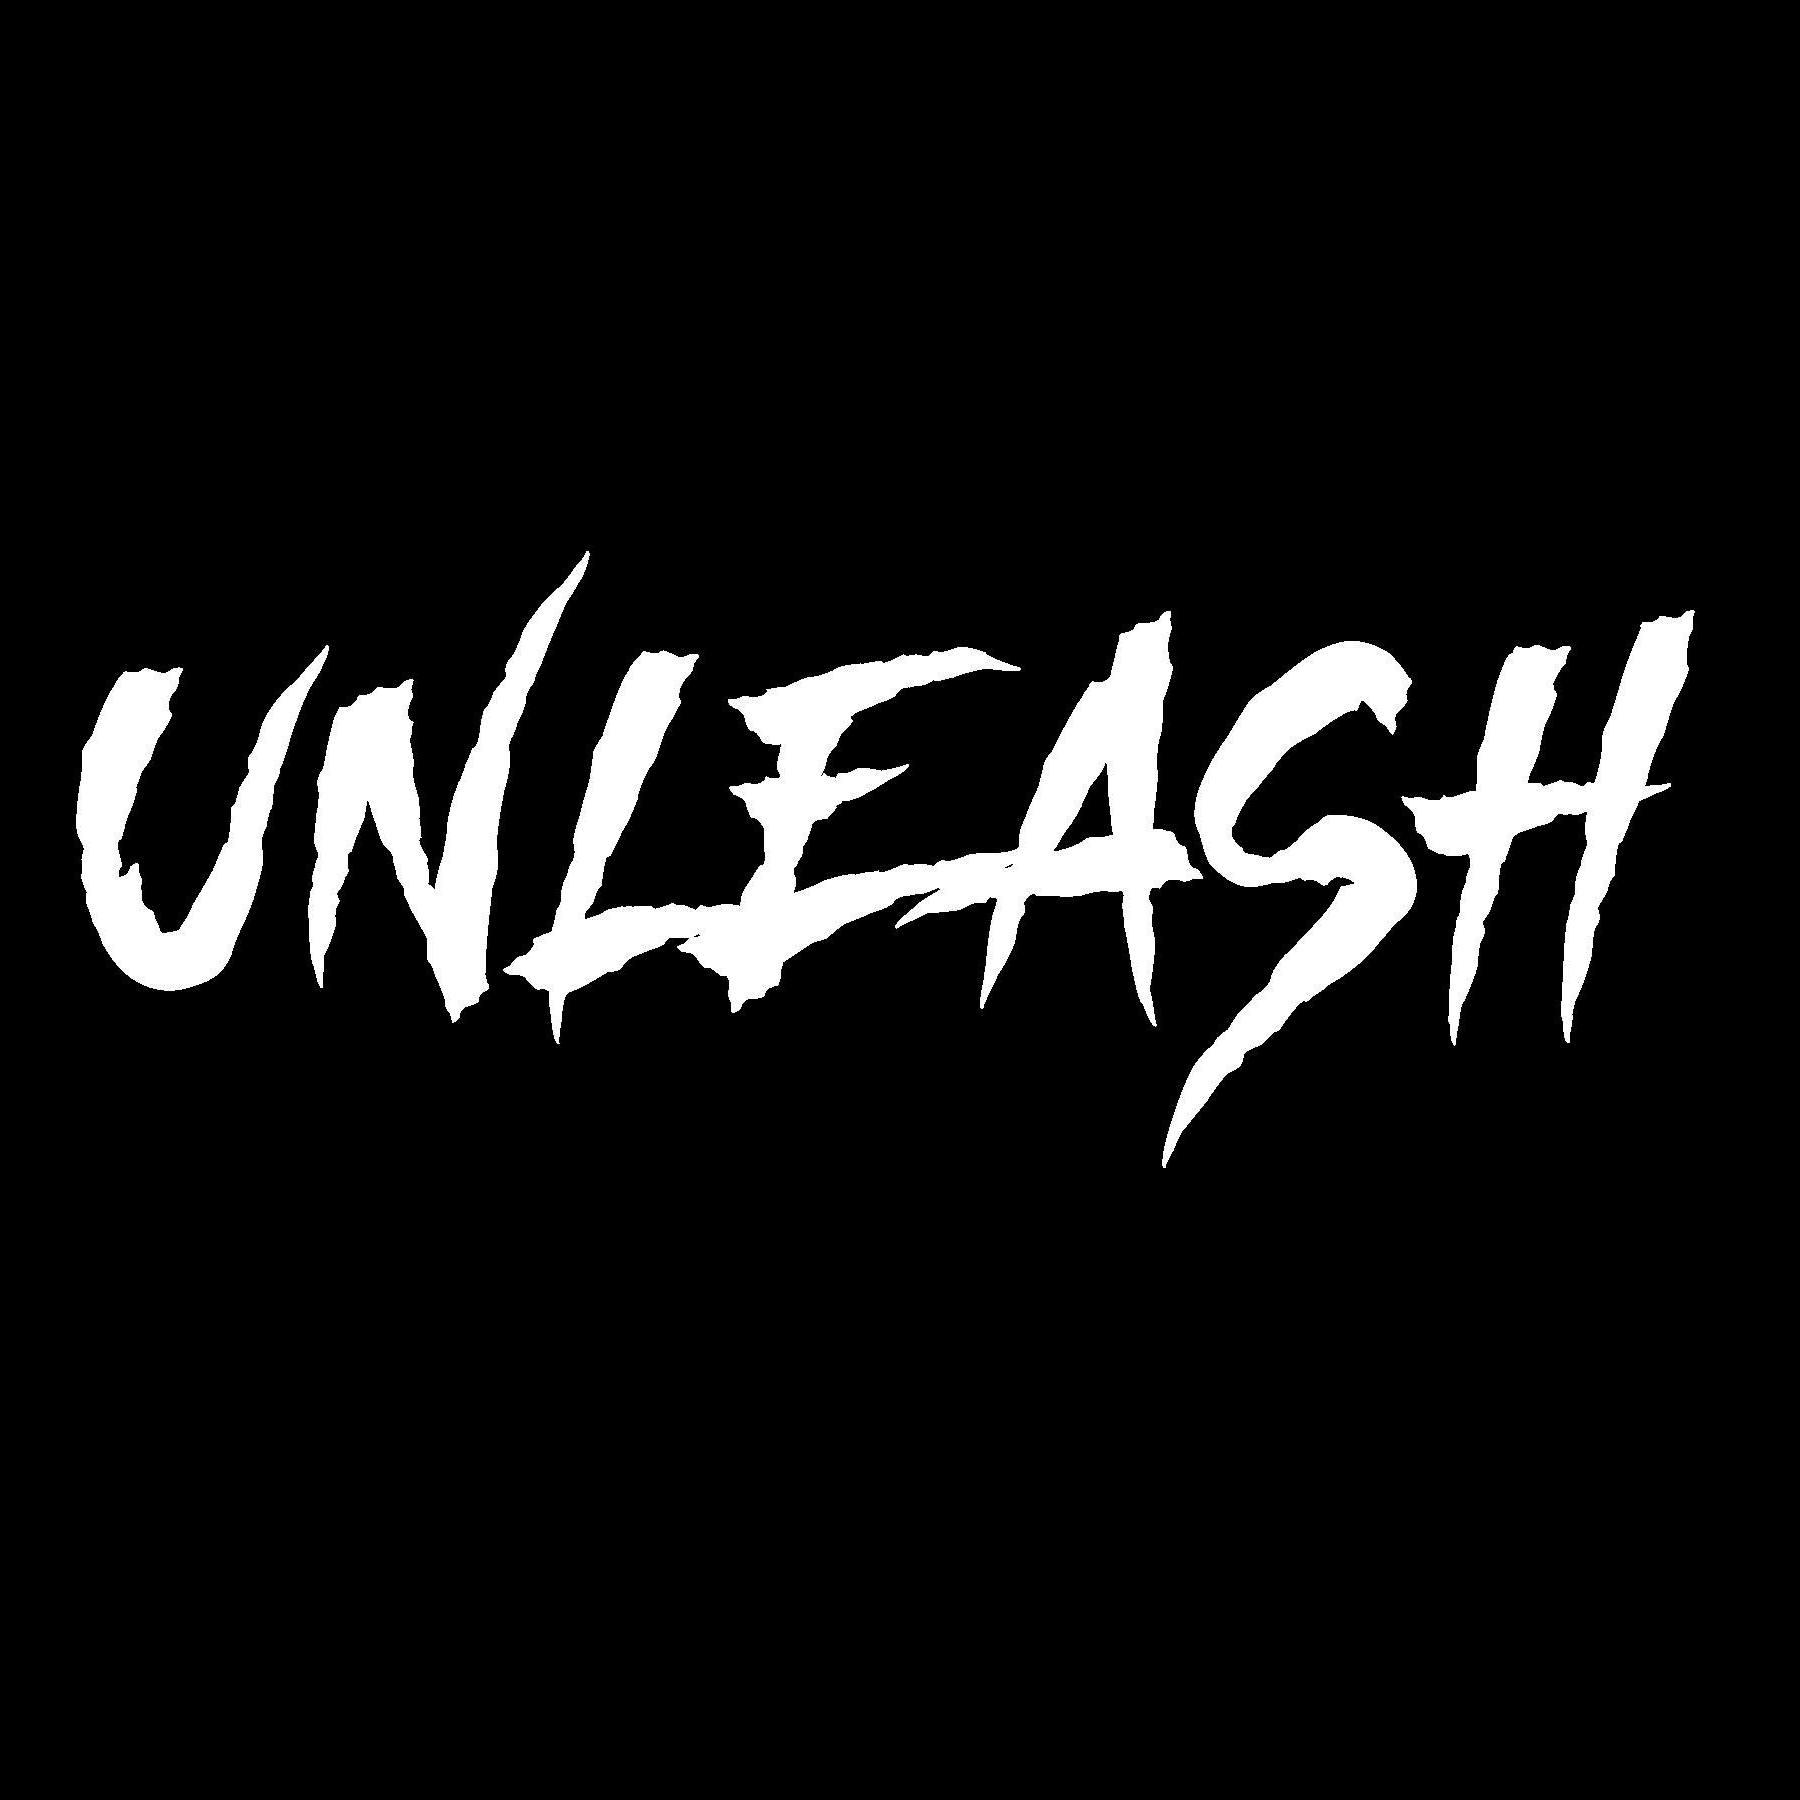 unleash logo 1674850609321